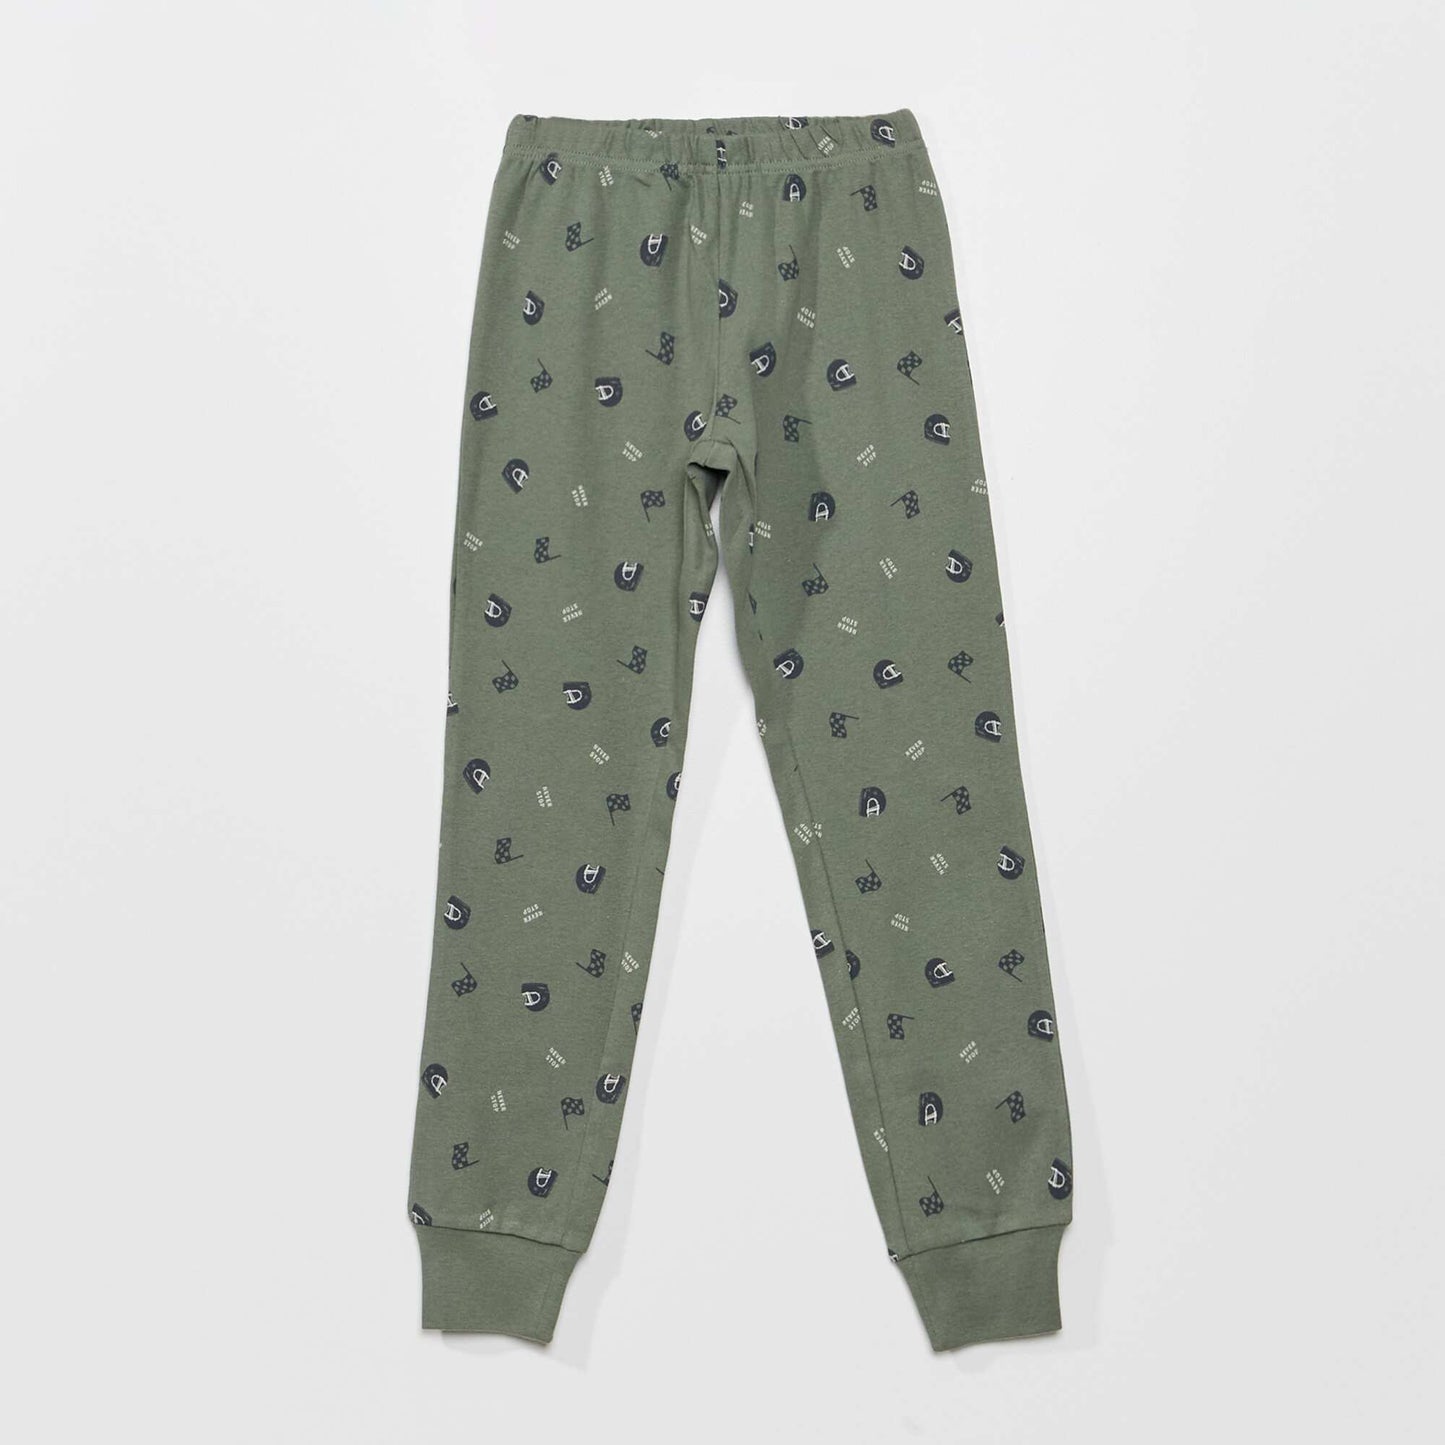 Patterned jersey pyjamas - Two-piece set GREEN